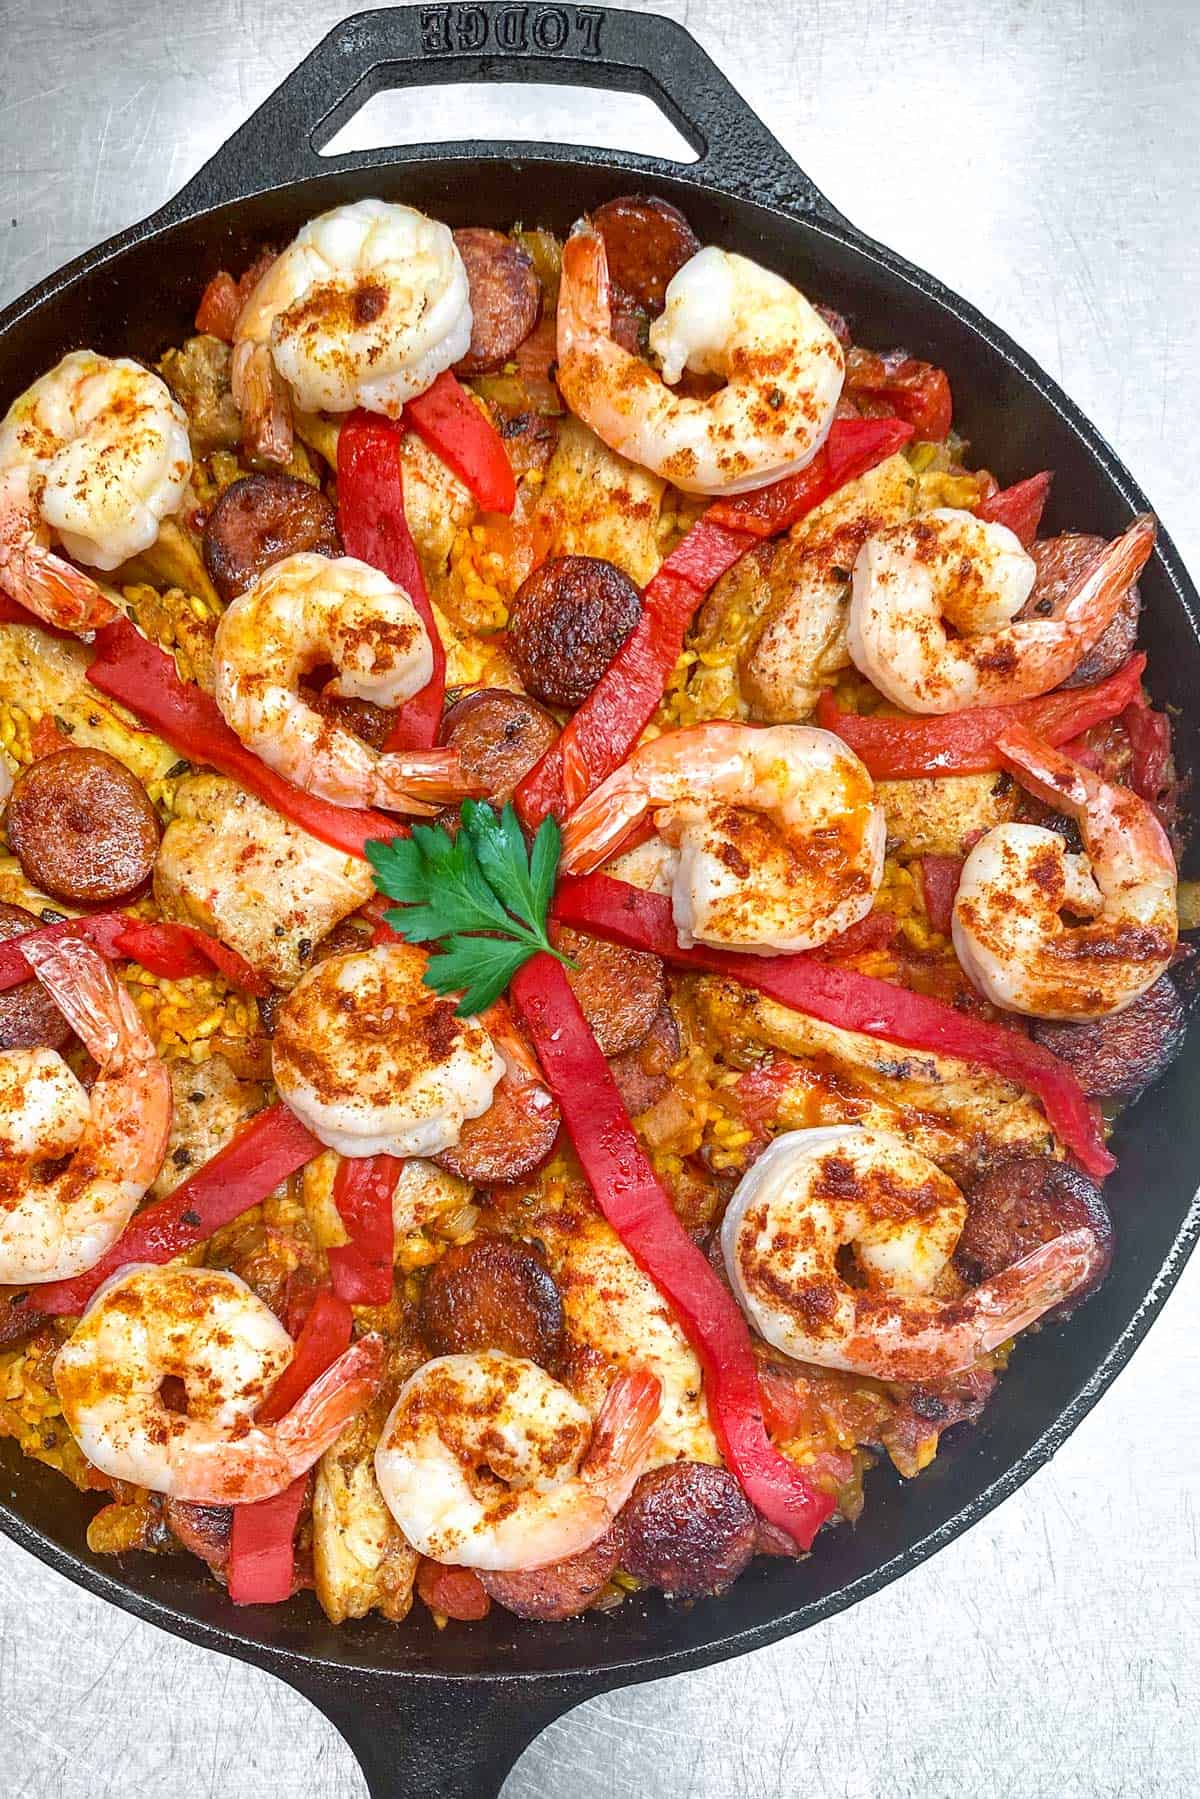 https://www.panningtheglobe.com/wp-content/uploads/2019/02/easy-spanish-paella-recipe-pan.jpg